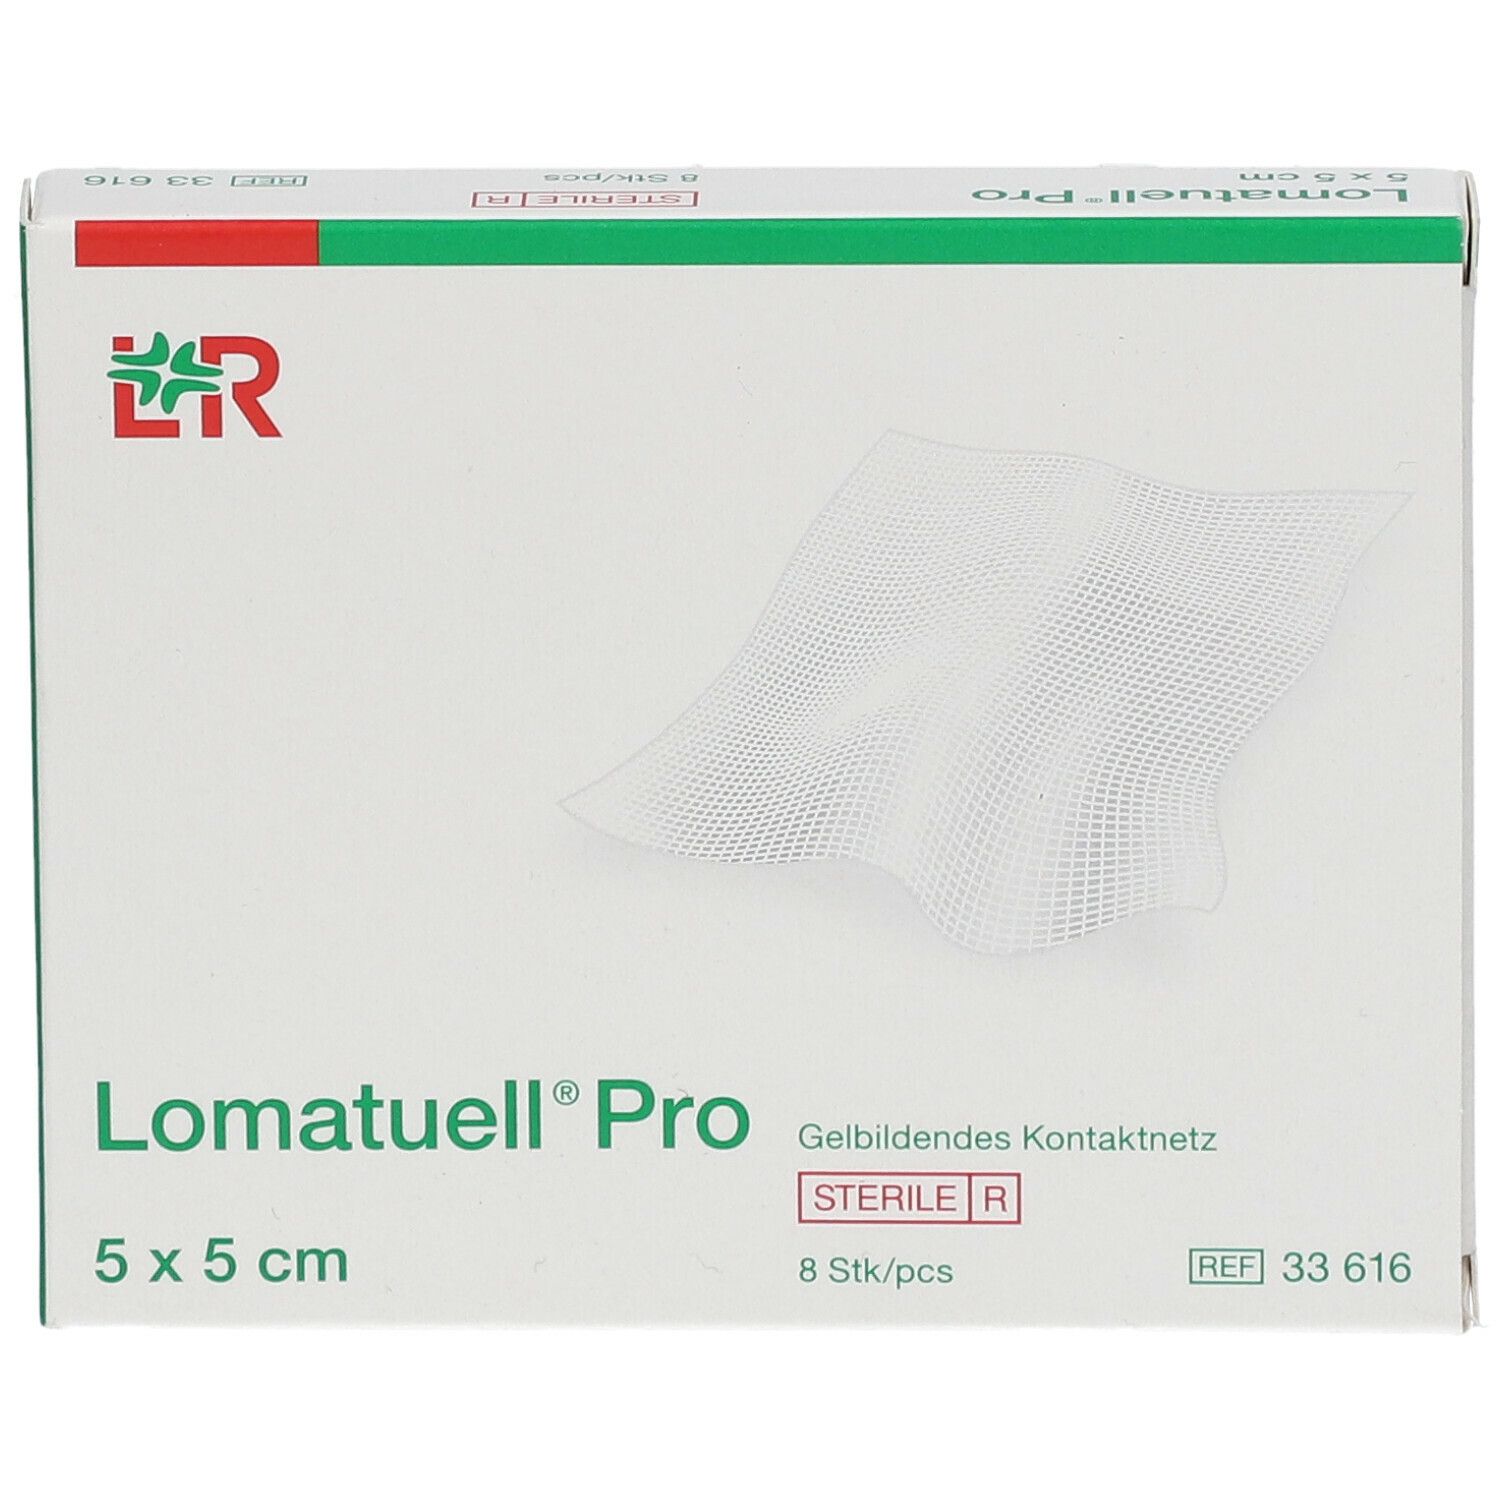 Lomatuell® Pro 5 cm x 5 cm steril